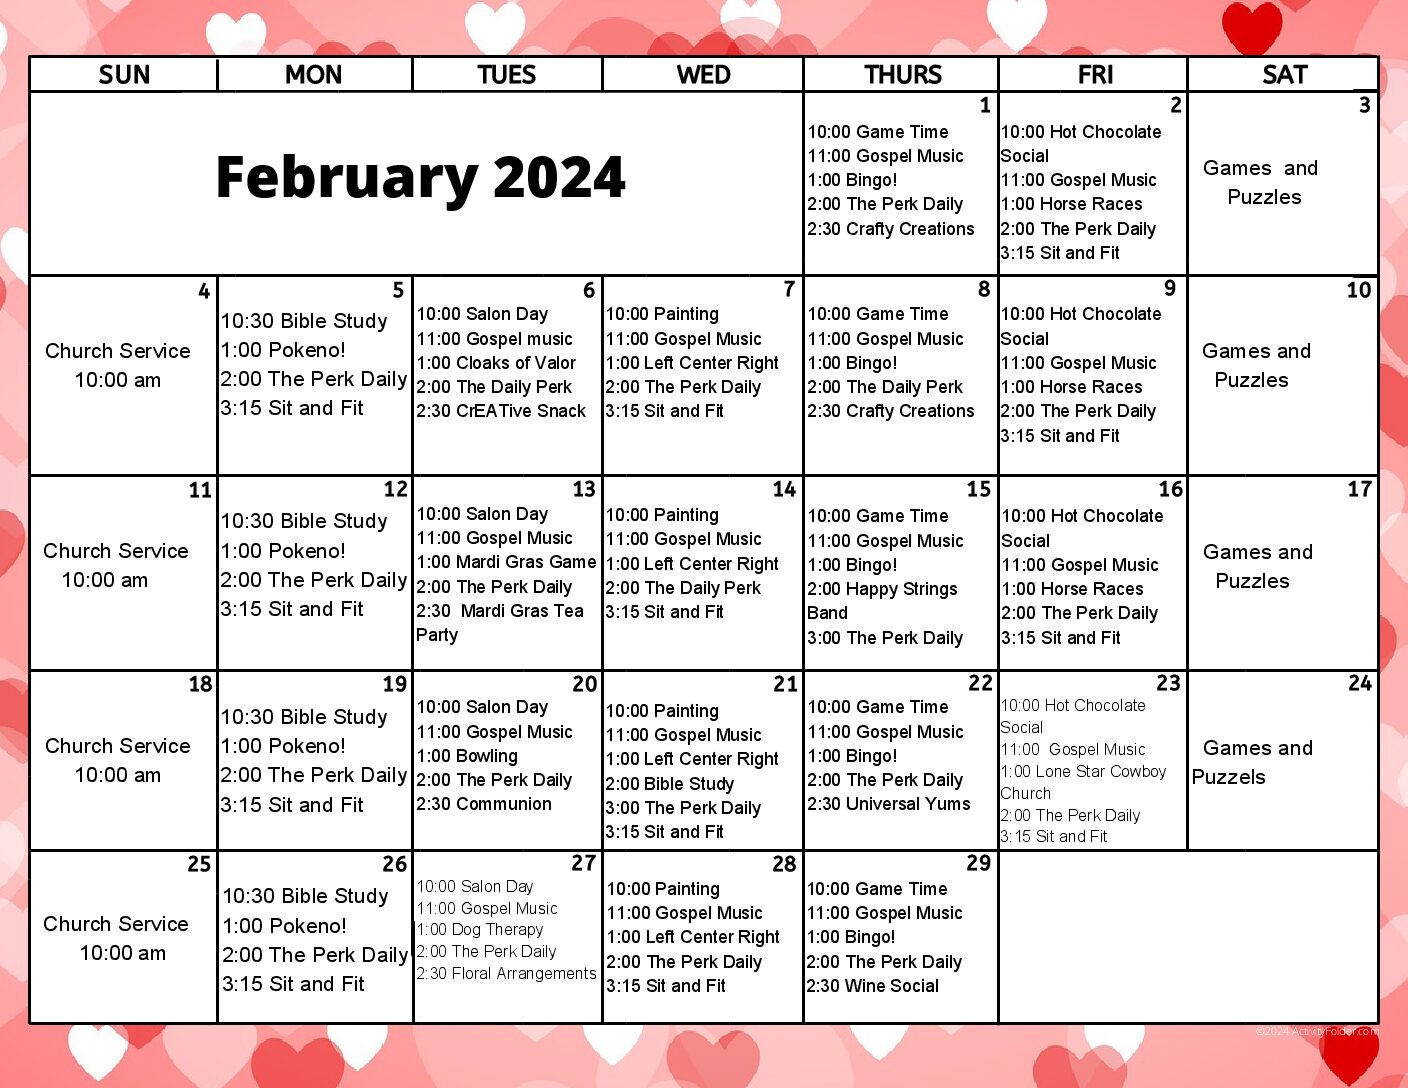 January 2022 Activities